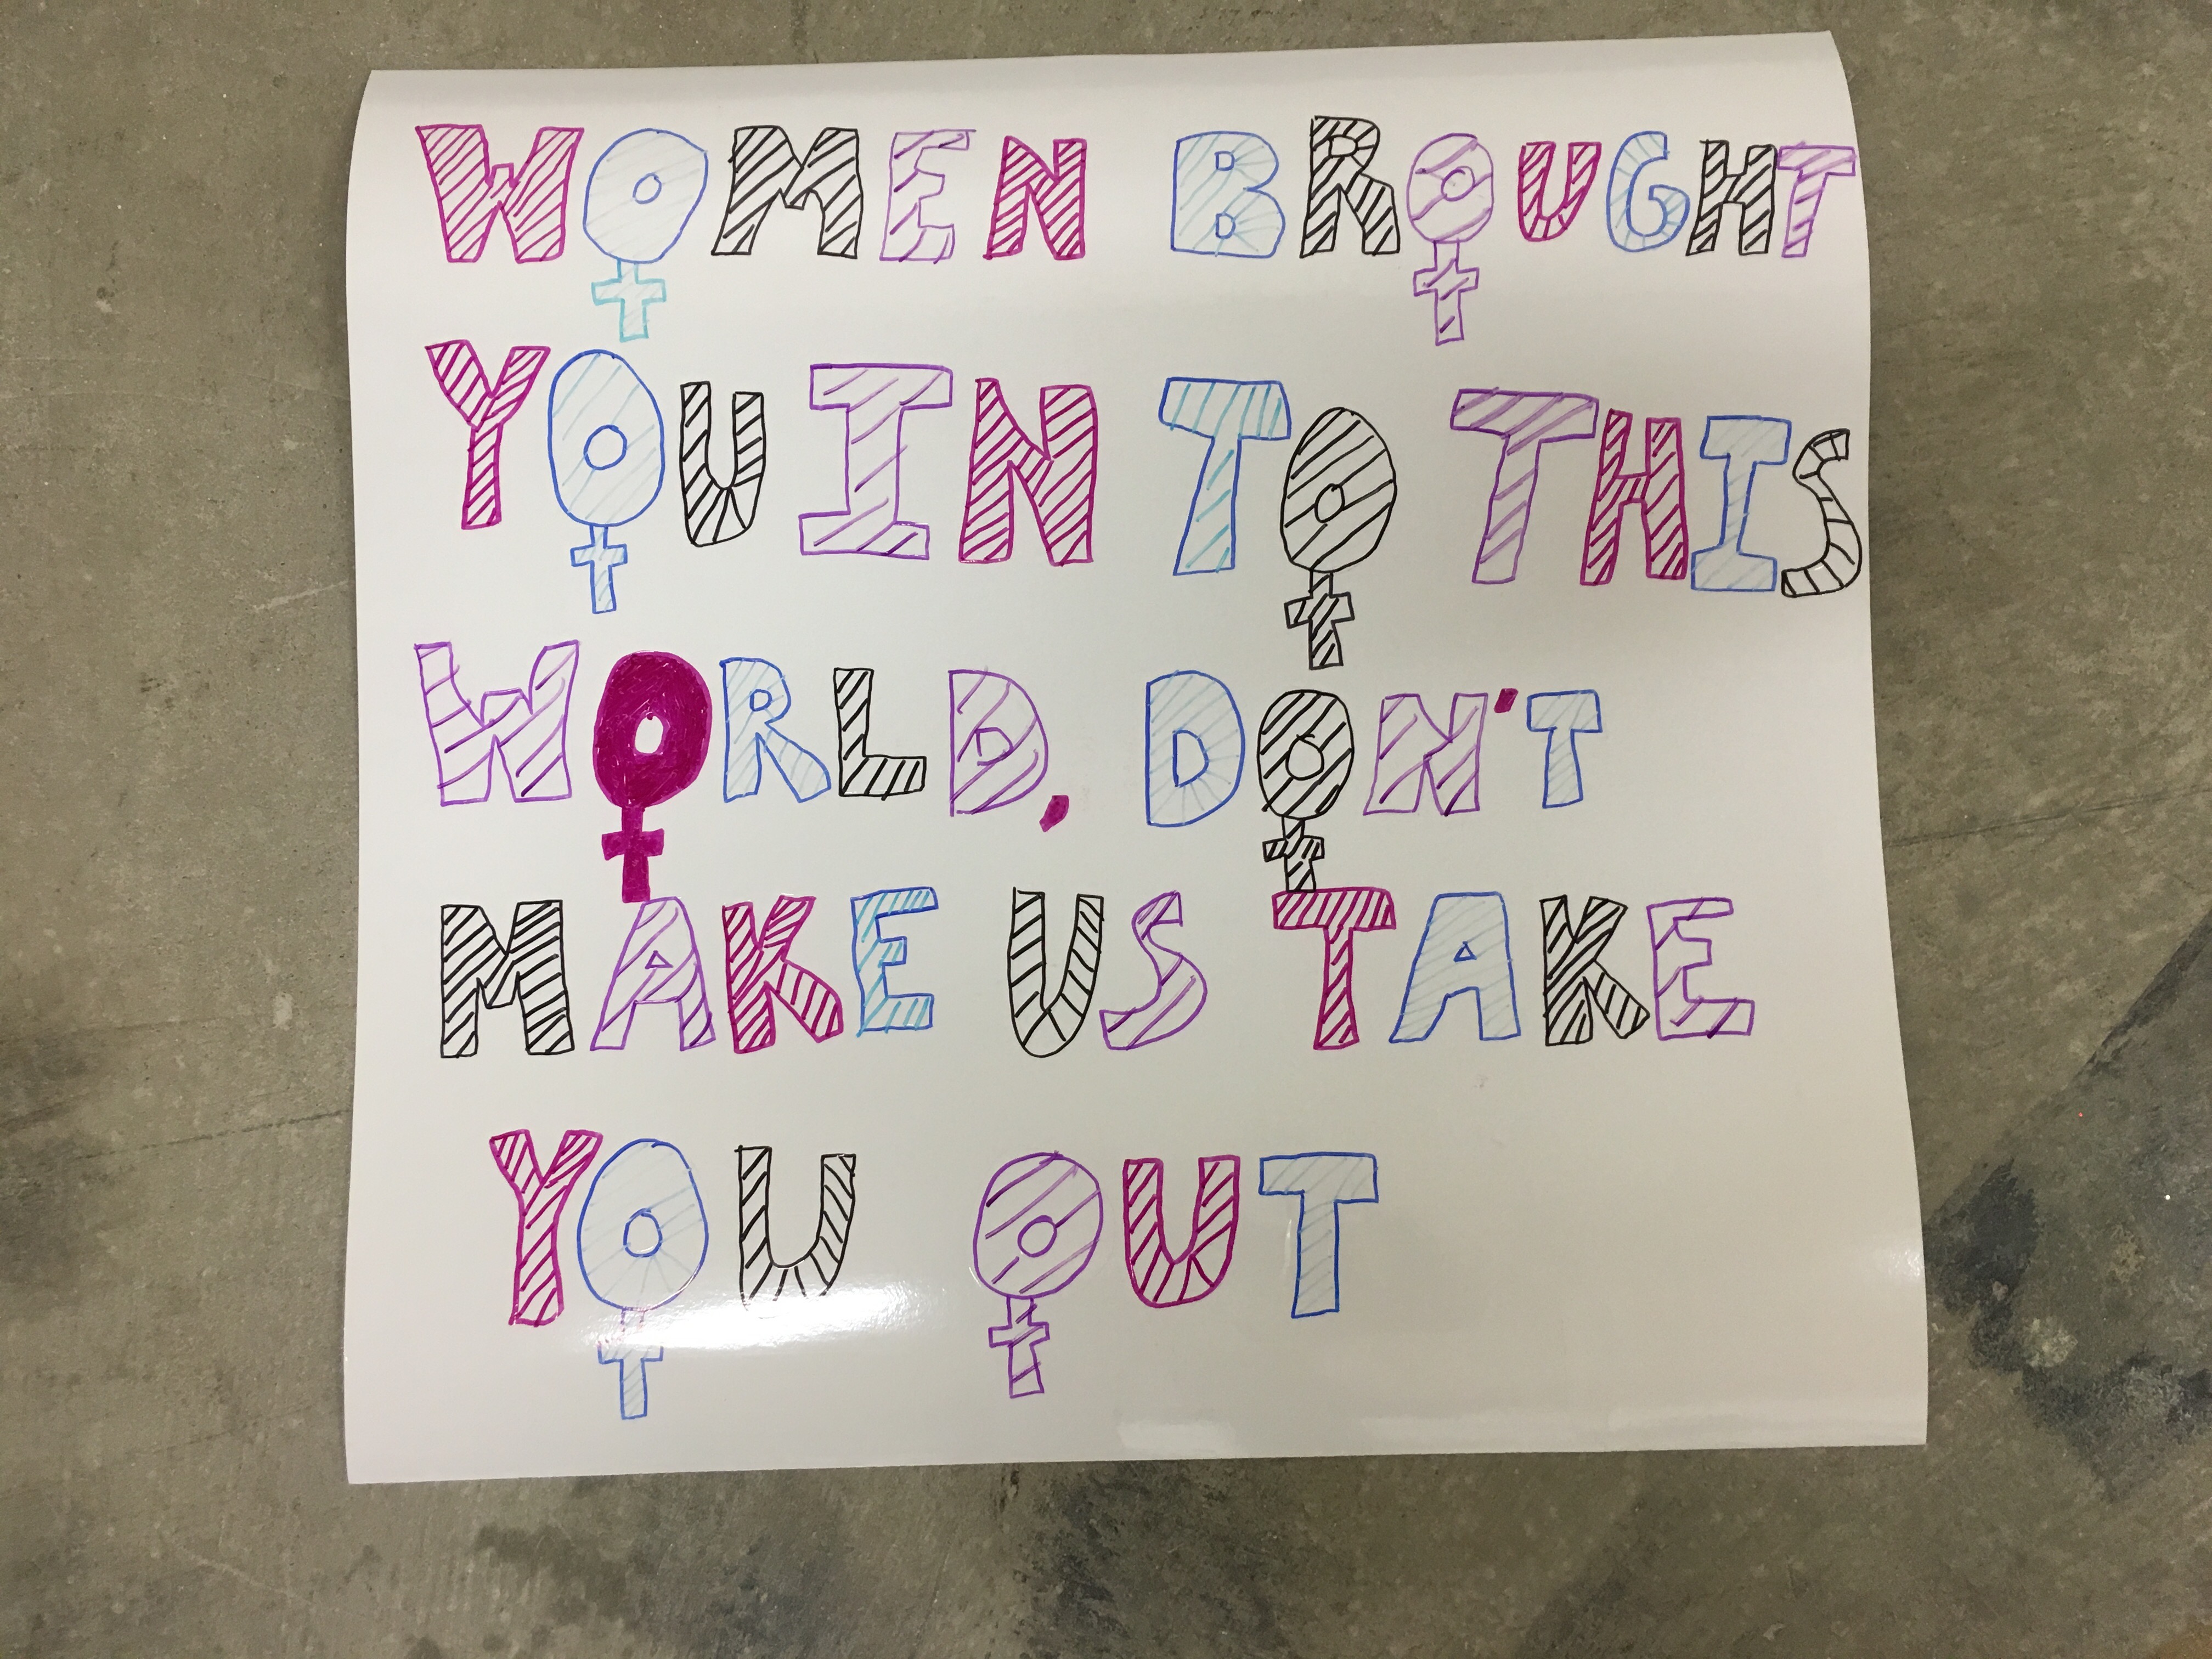 Denver Public Library to archive city’s Women’s March